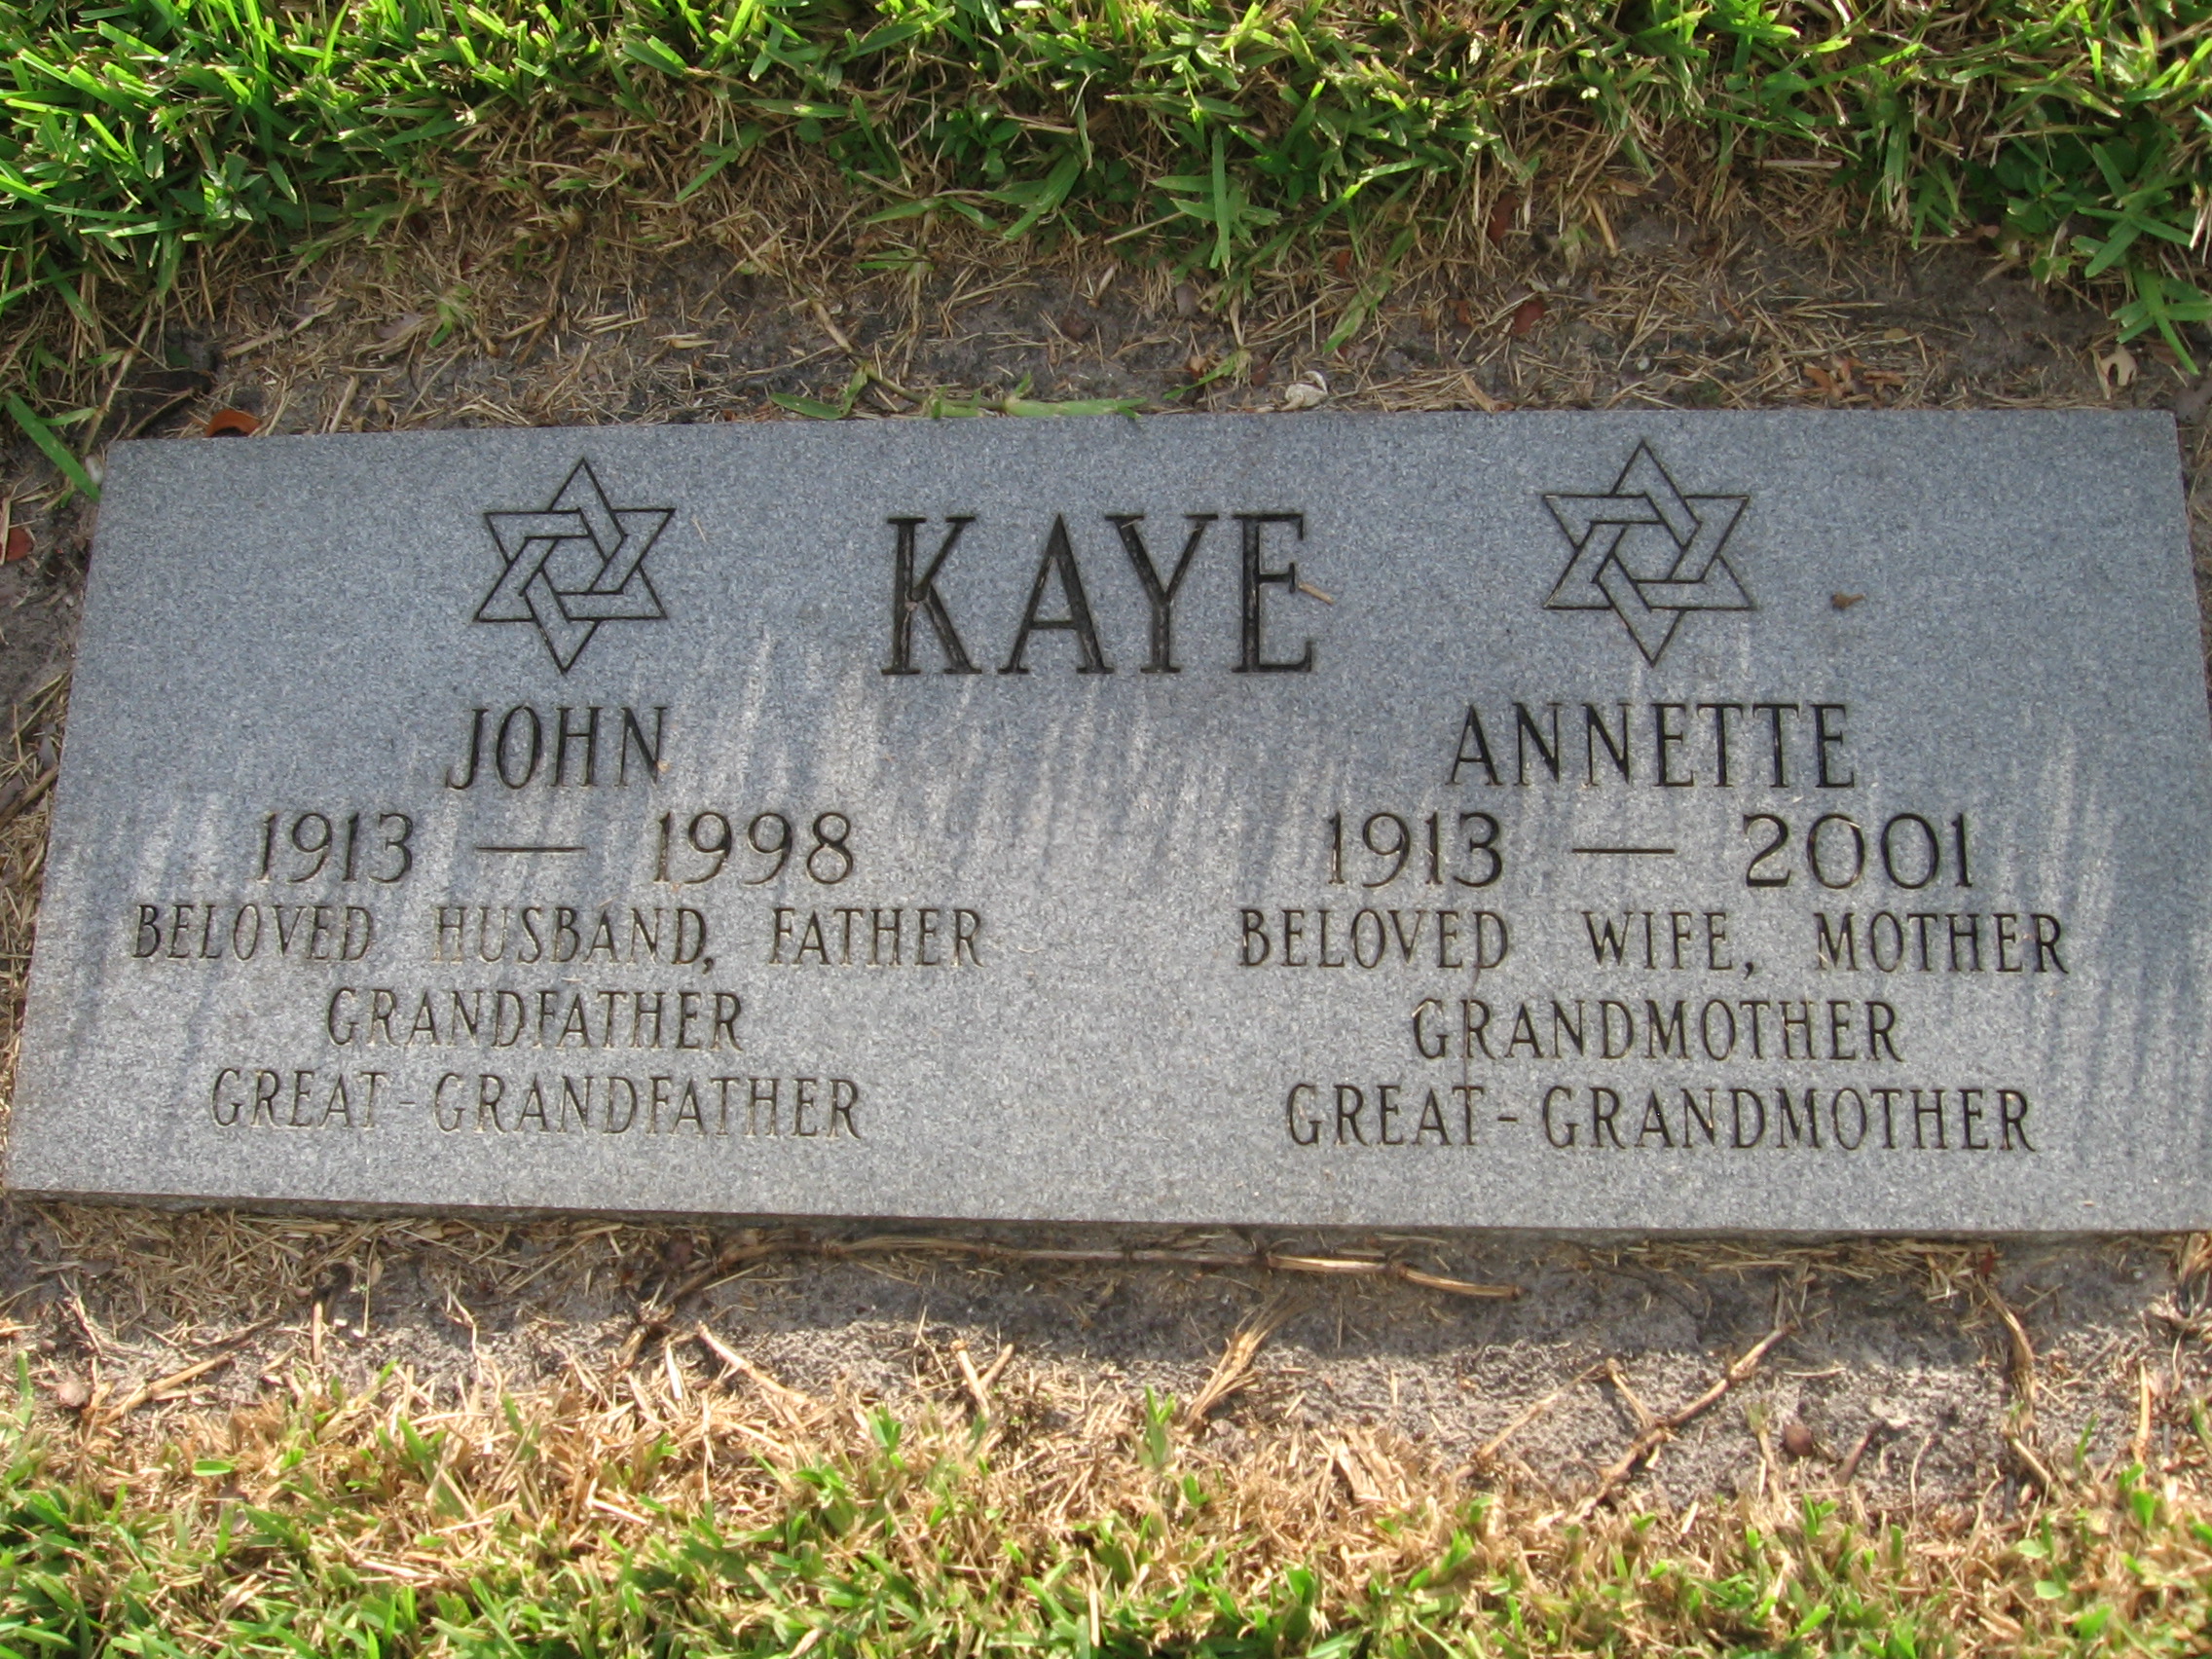 Annette Kaye